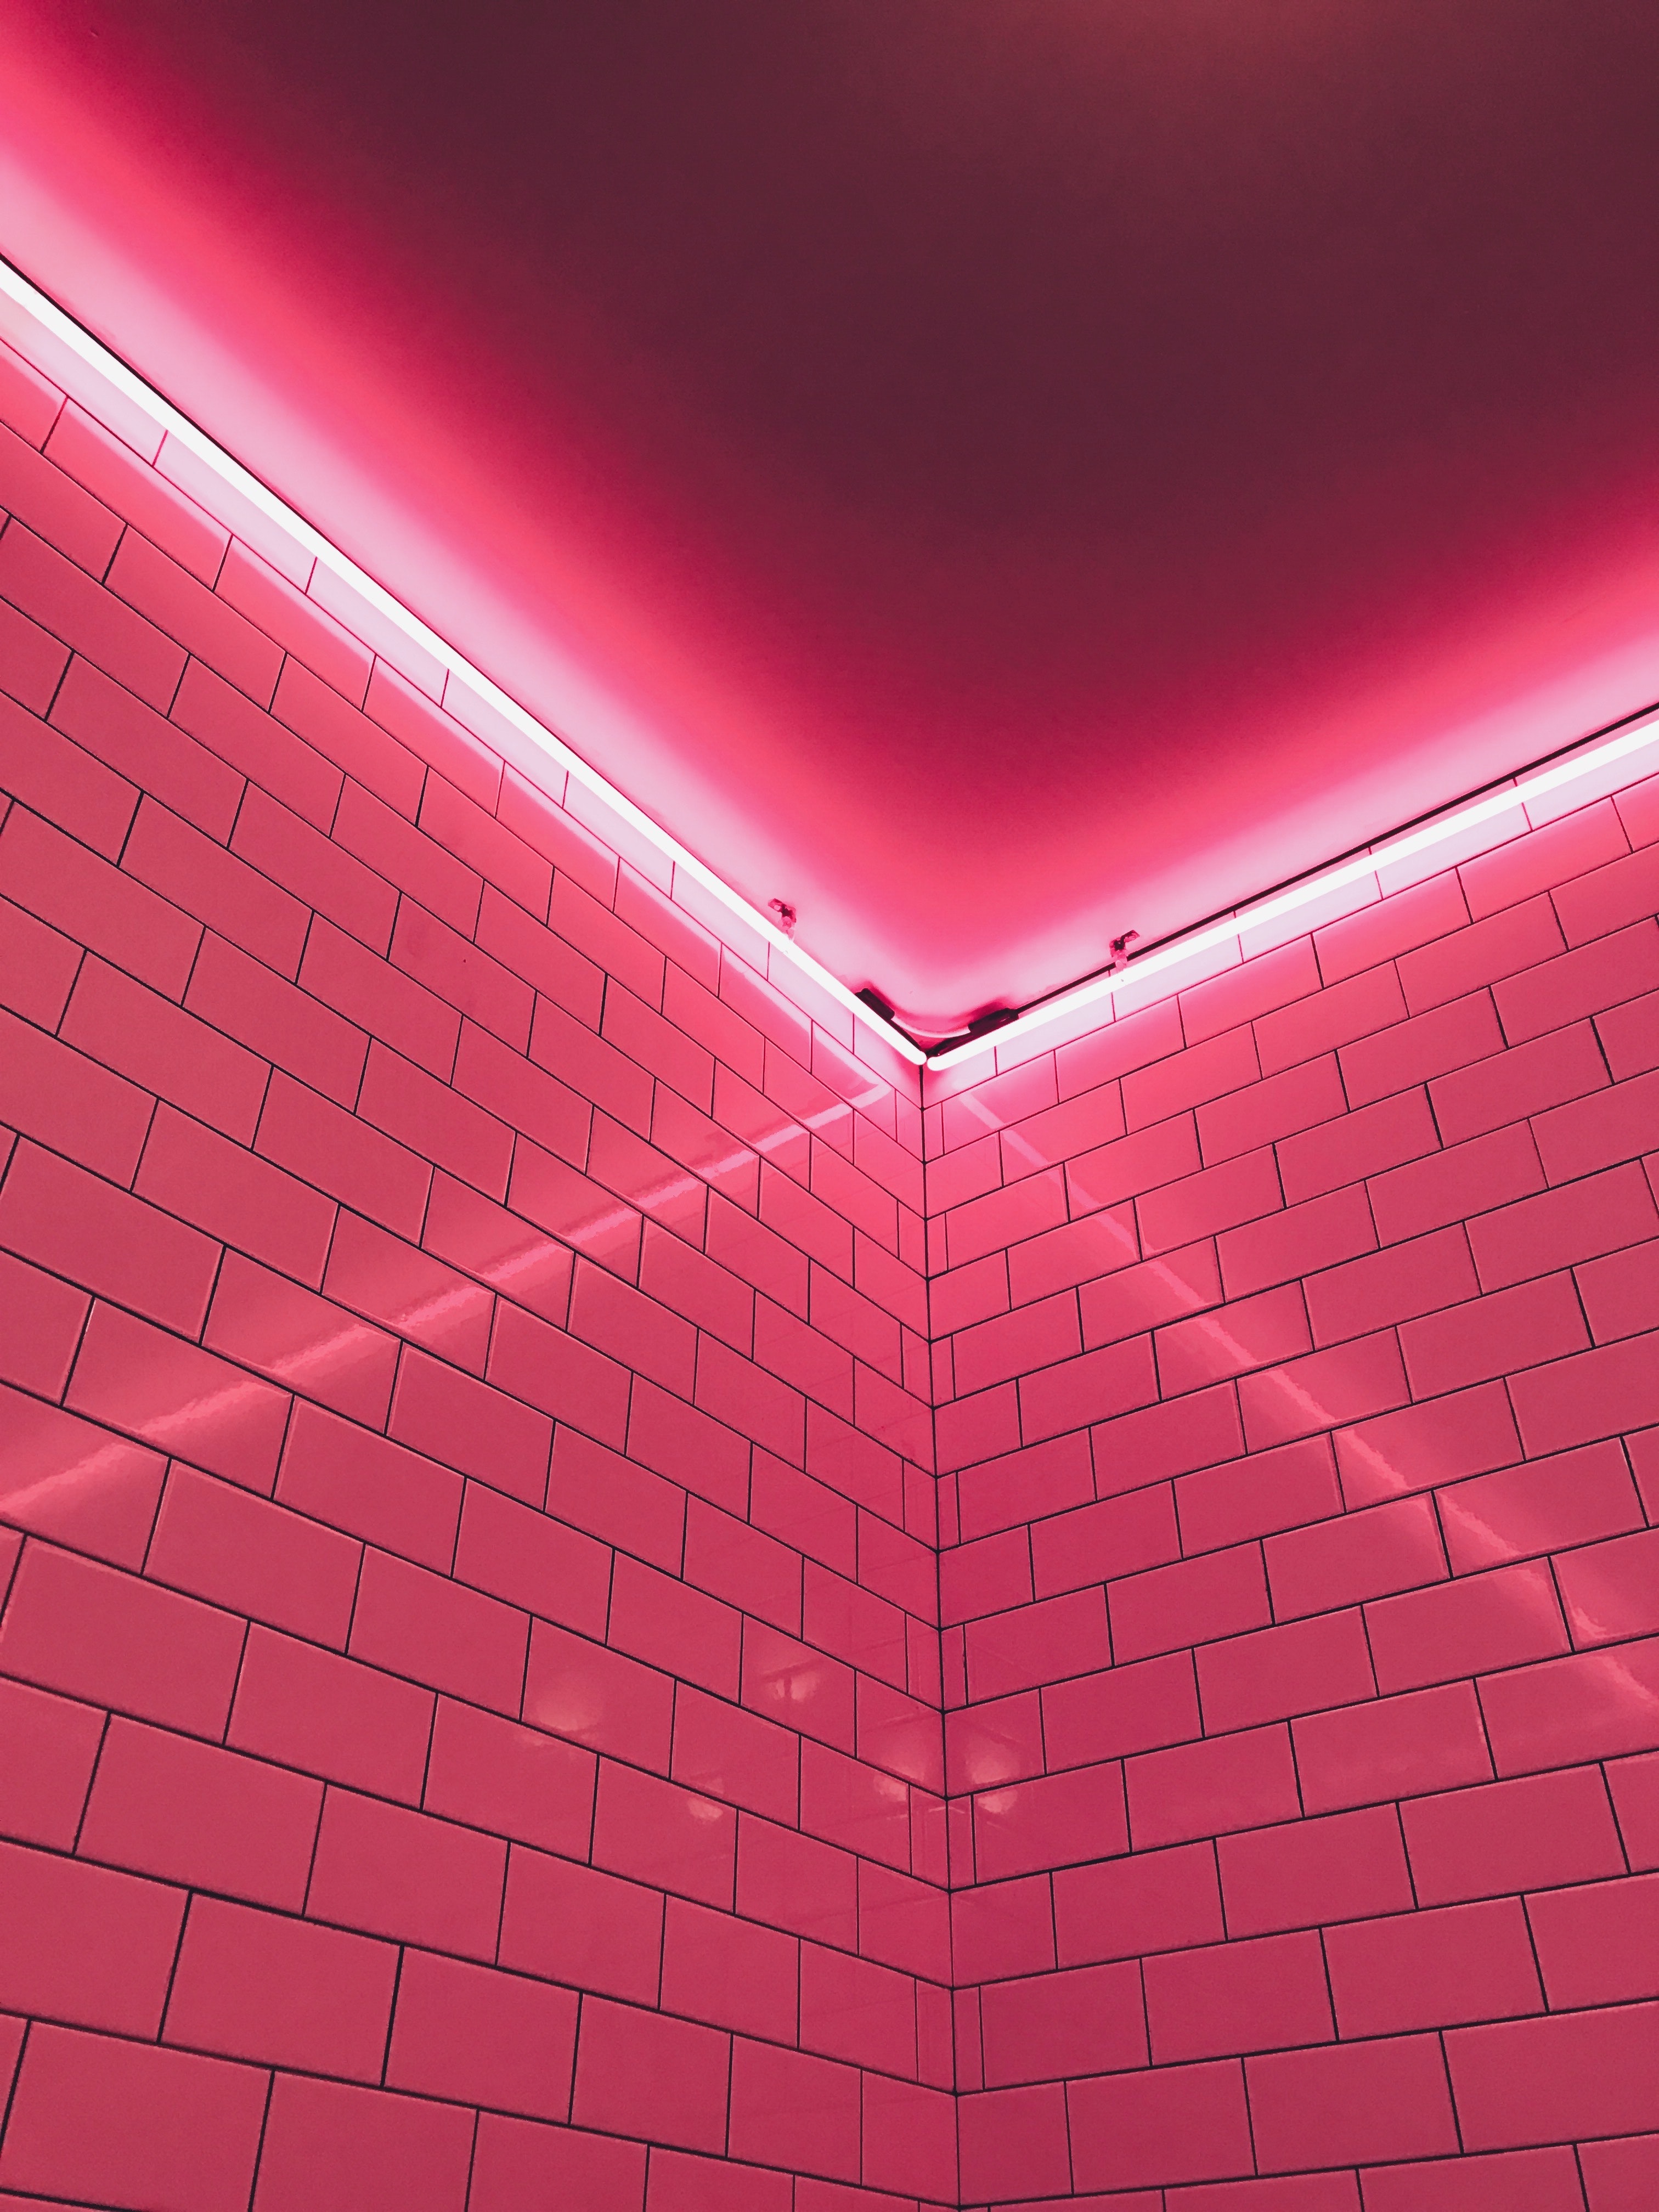 Background Pink Neon Light - 3024x4032 Wallpaper 